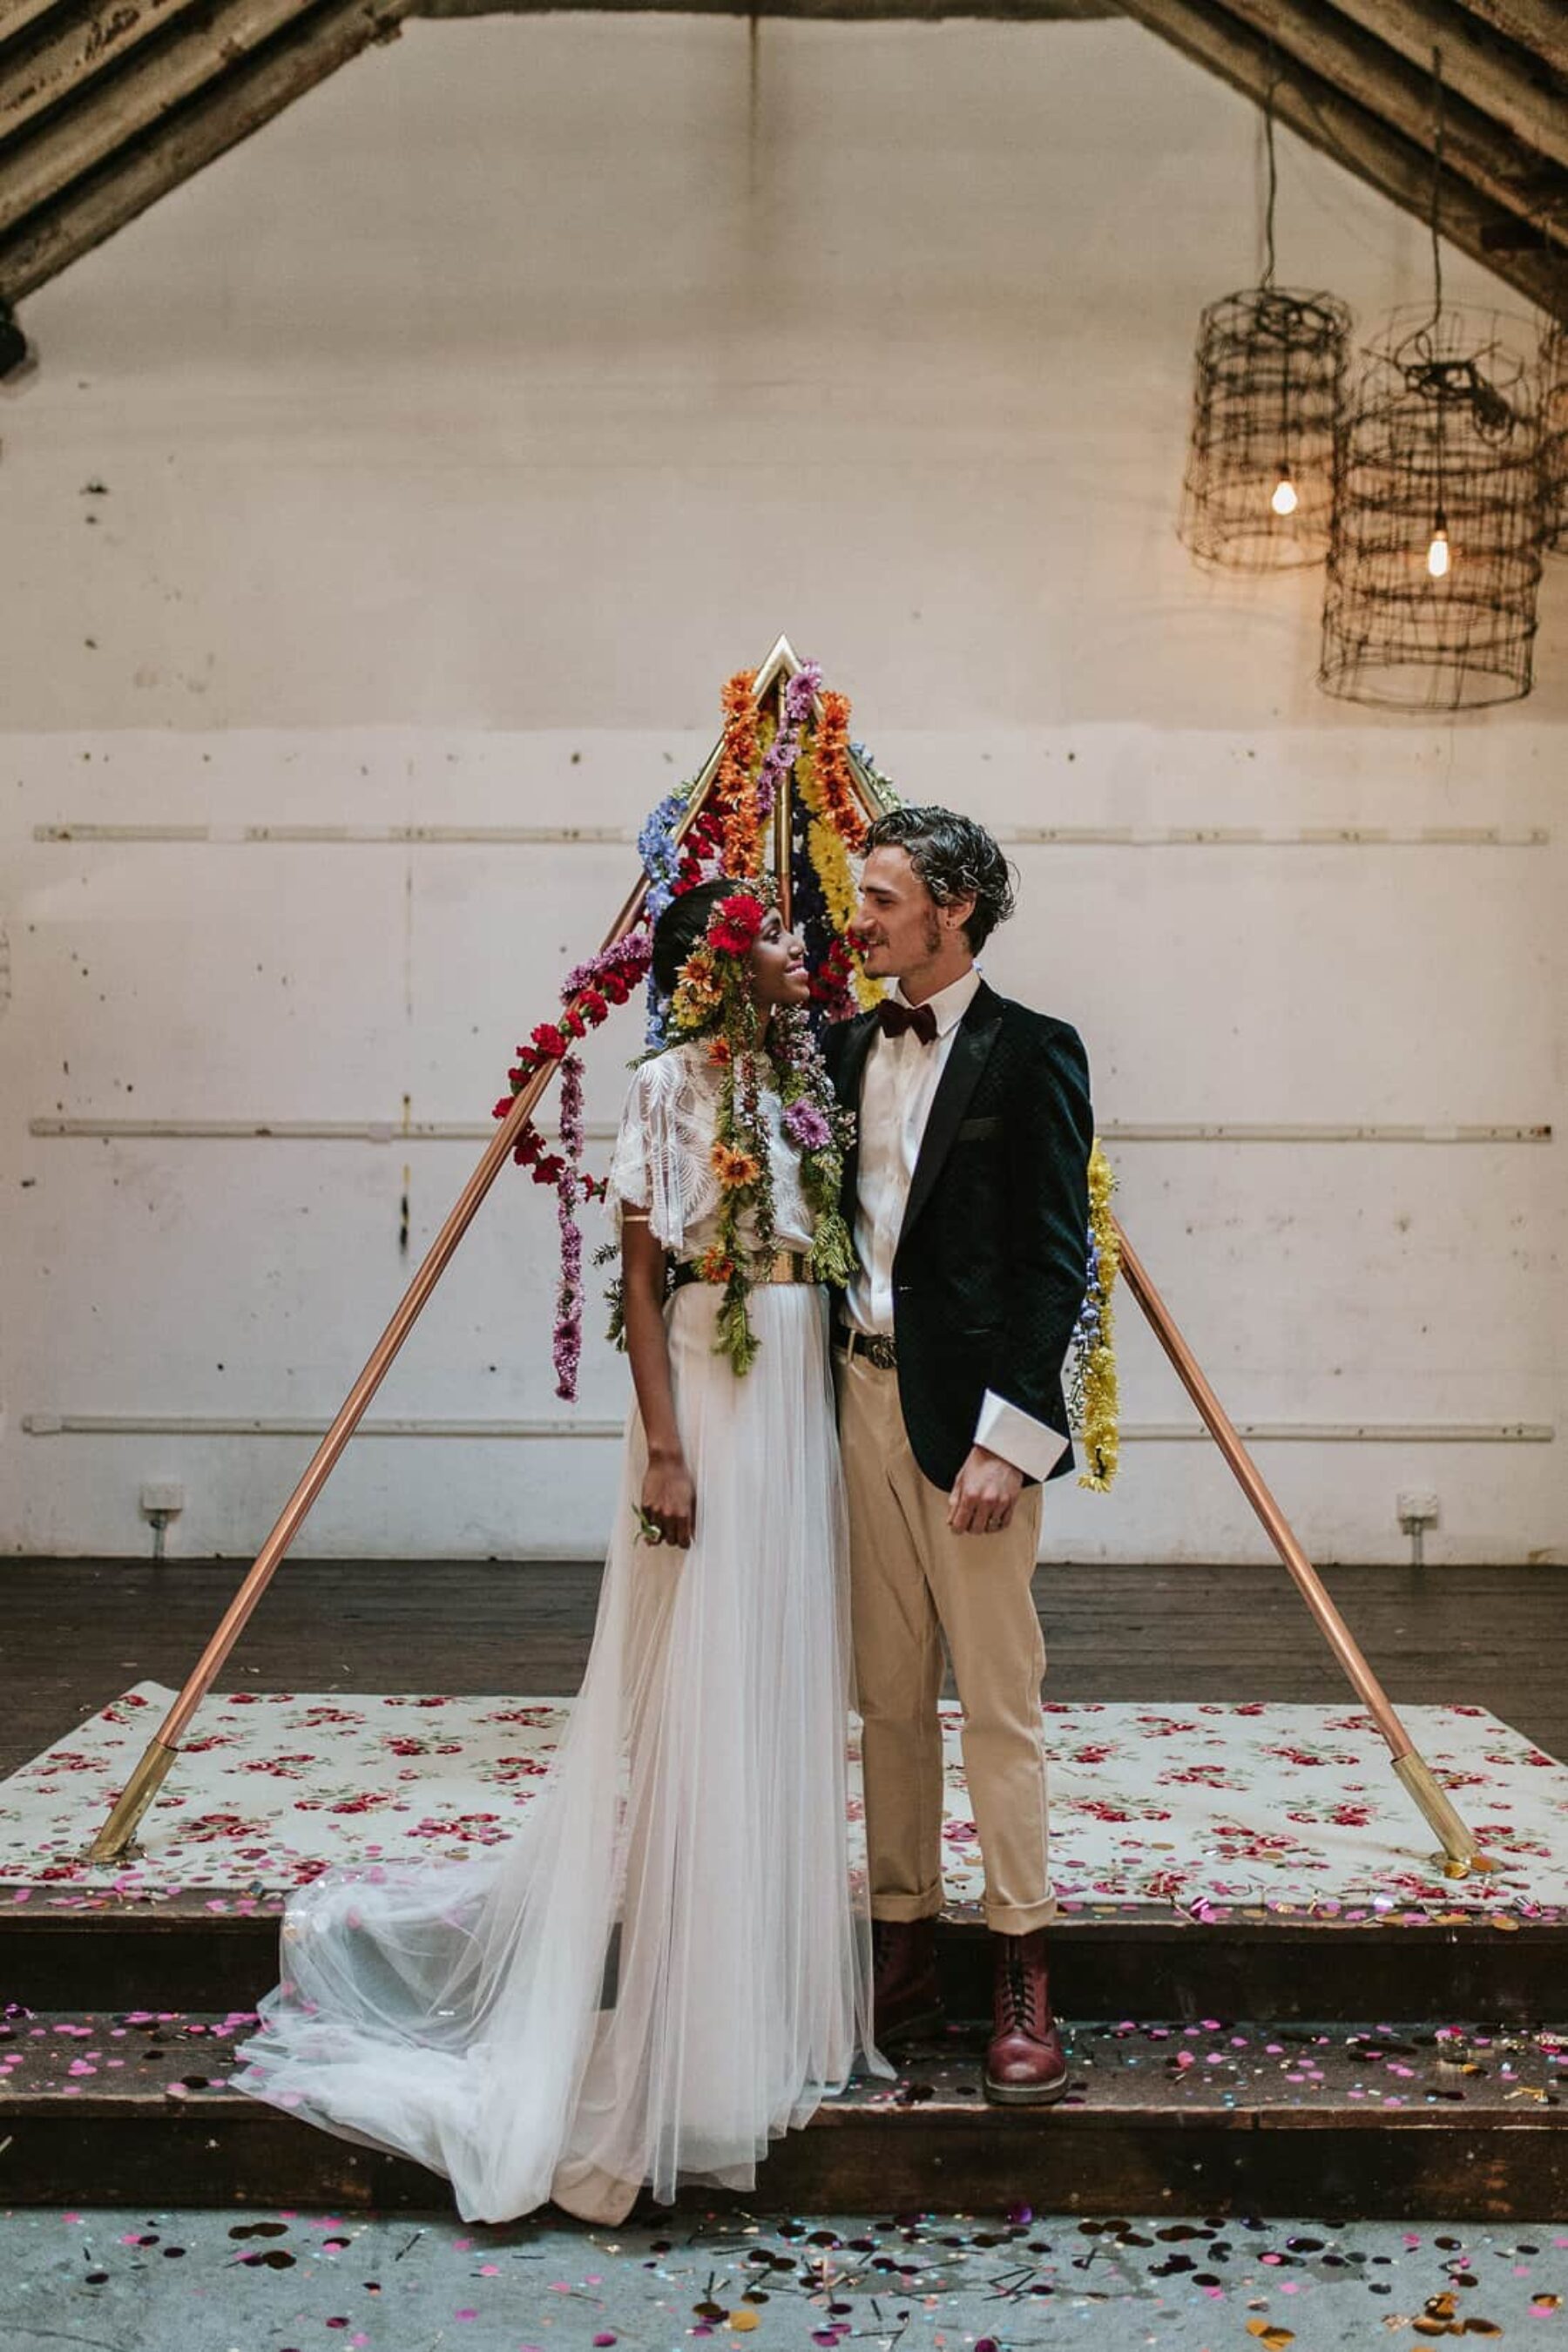 pyramid wedding backdrop with floral garlands